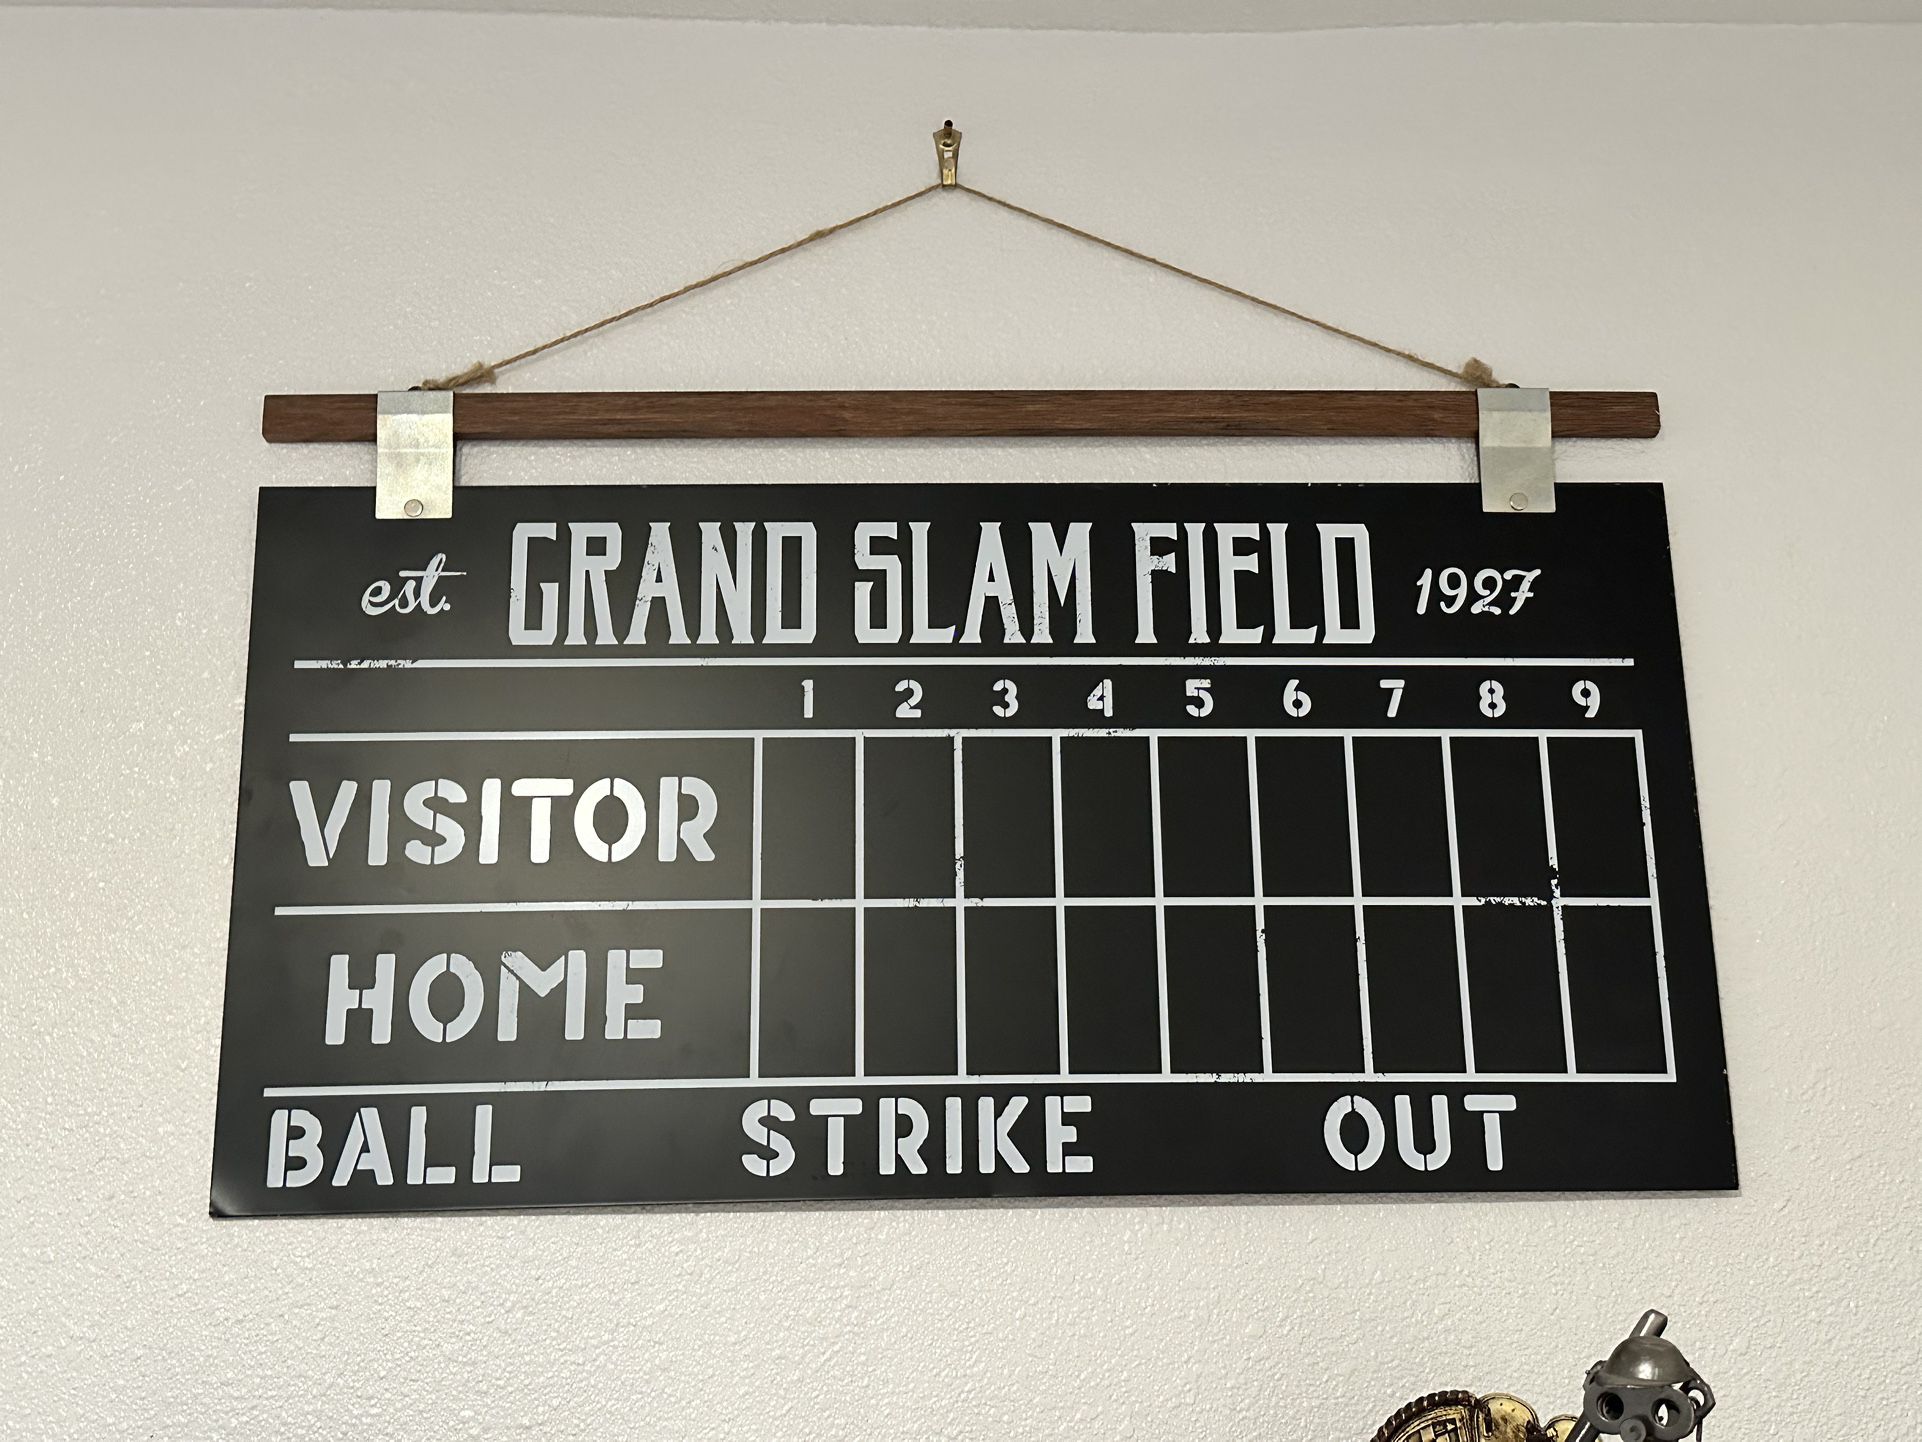 Baseball Score Sign